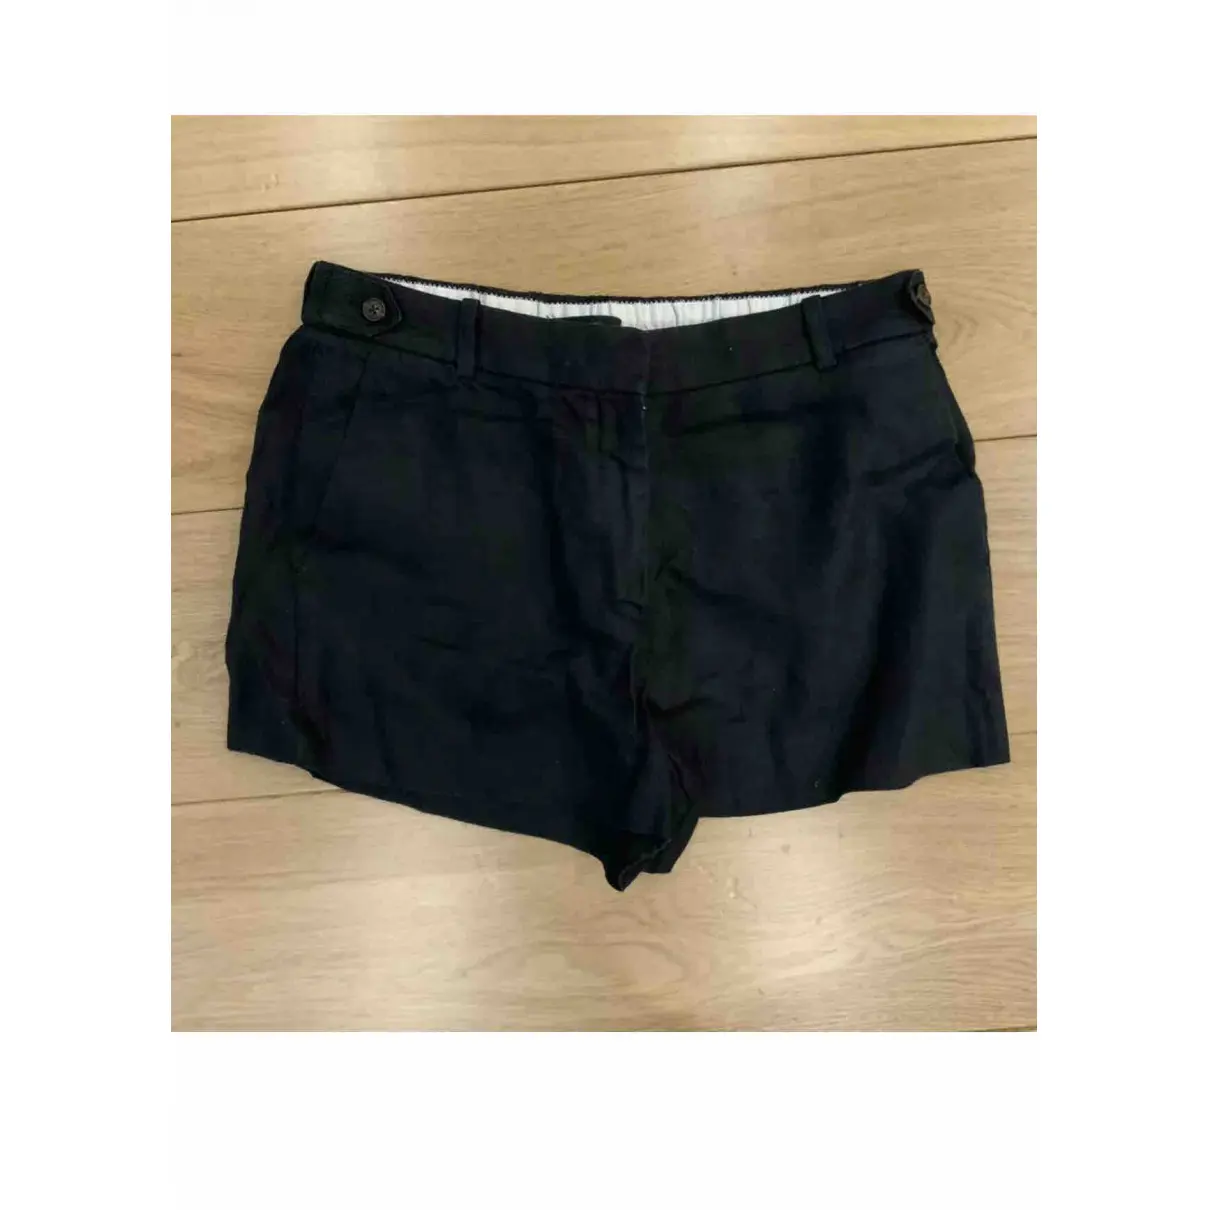 Buy J.Crew Black Cotton Shorts online